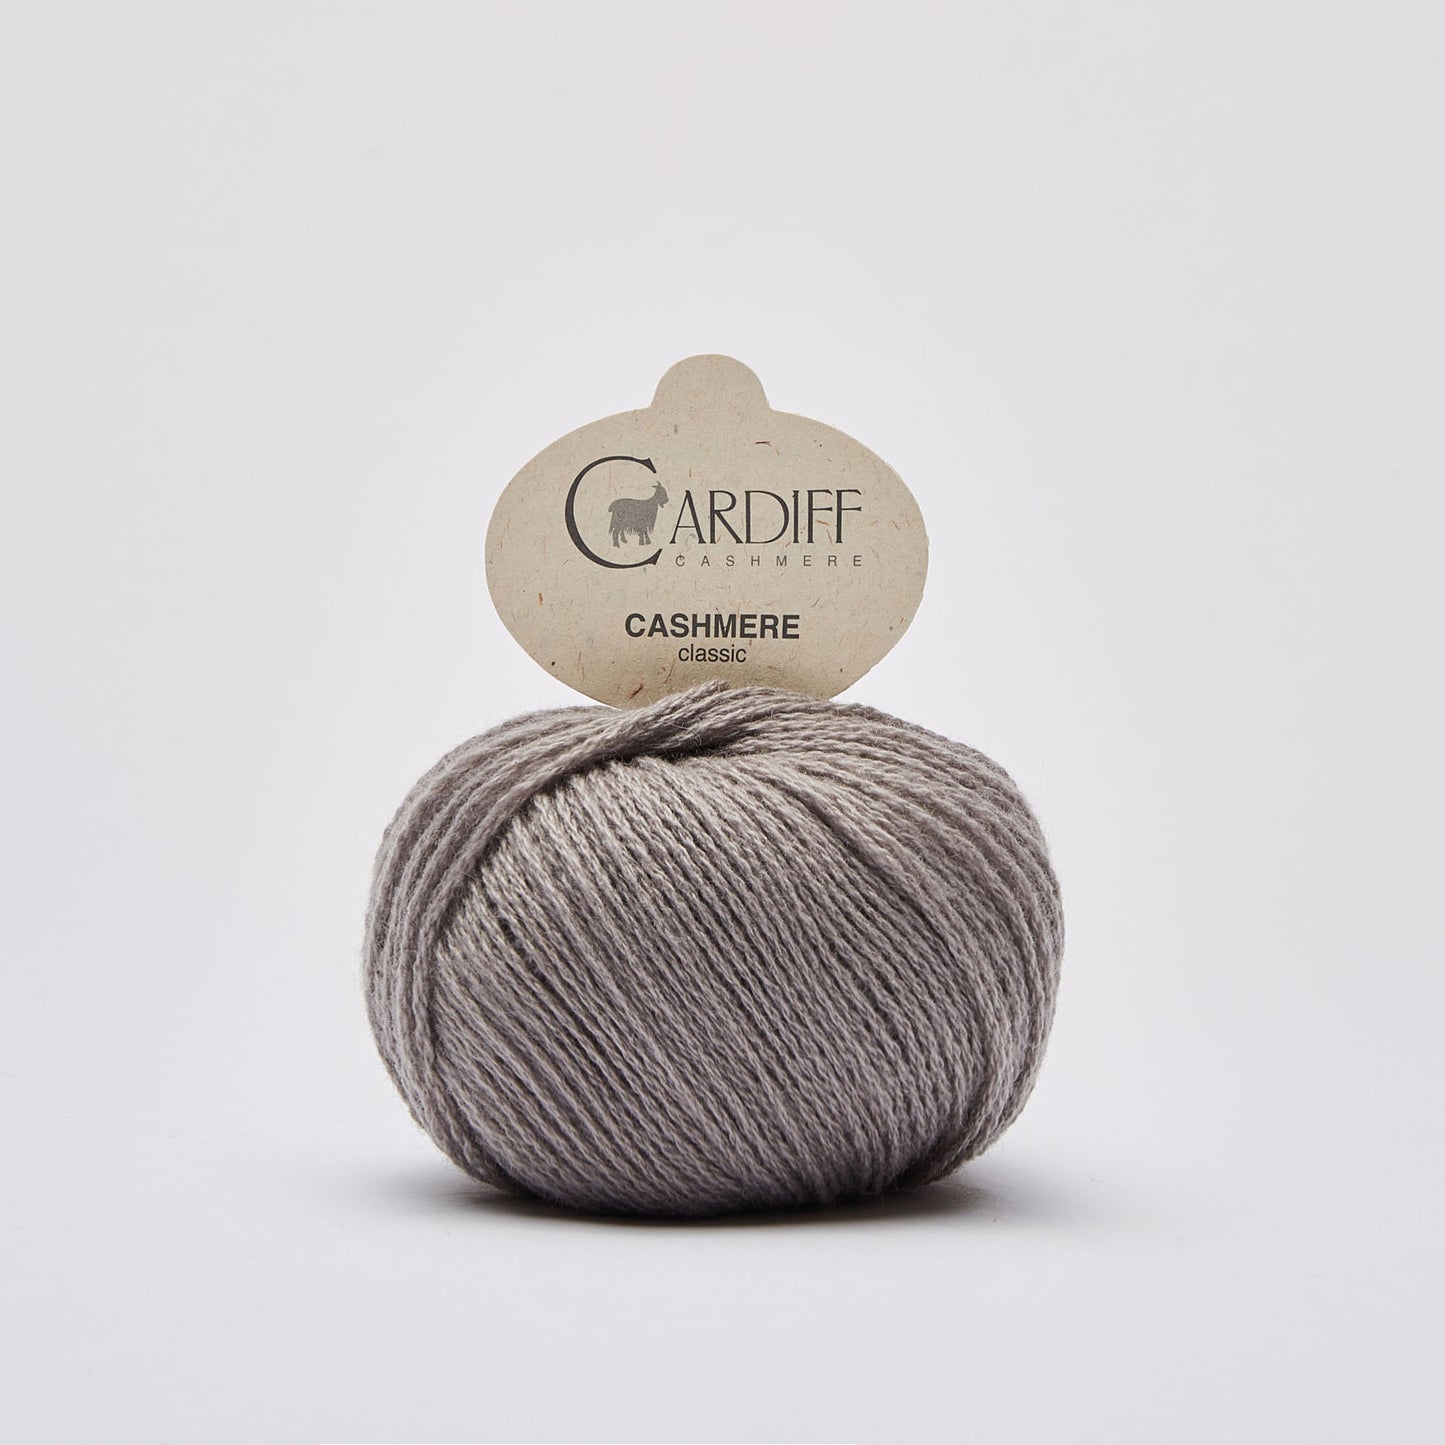 Cardiff CLASSIC gentle yarn, 532, GALILEO, comp: 100% Cashmere